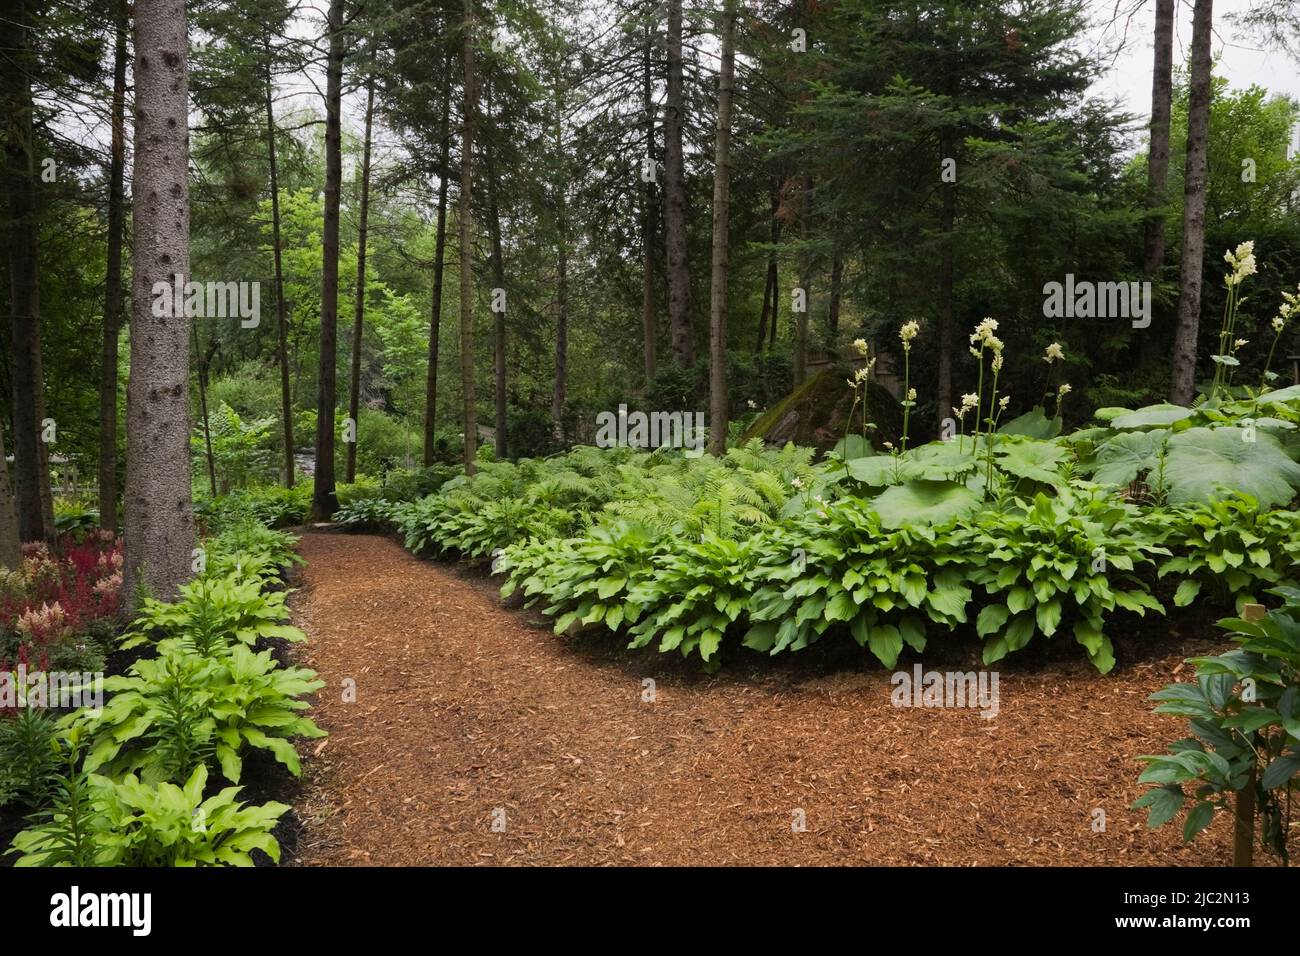 Cedar mulch footpath in landscaped front yard garden in summer. Stock Photo